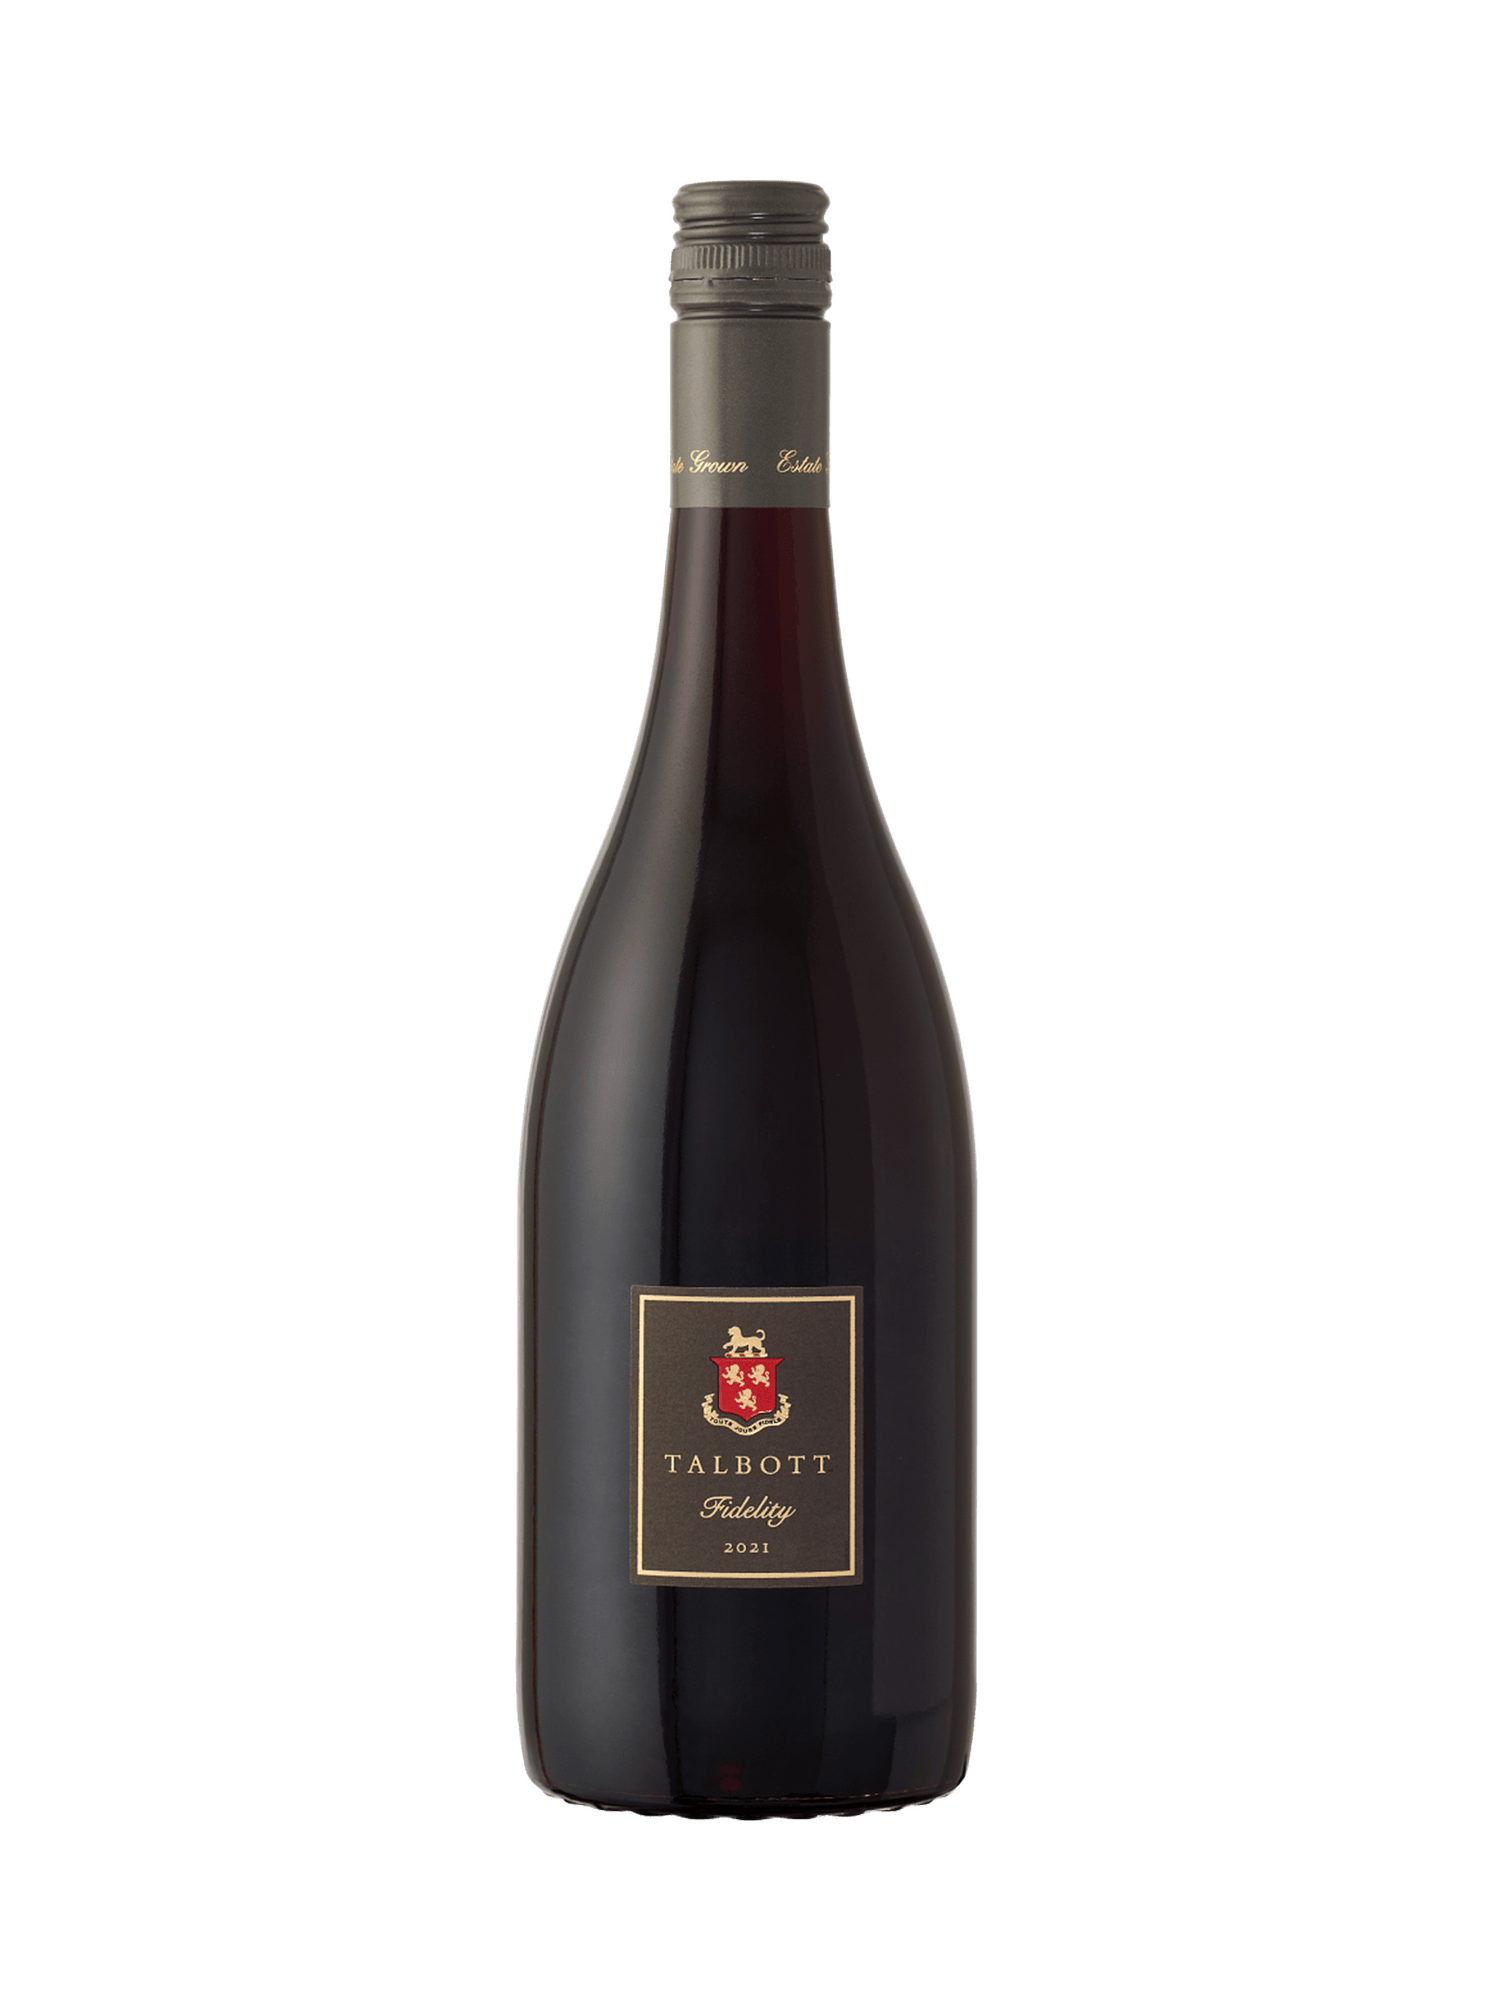 Talbot 2021 Fidelity Wine.